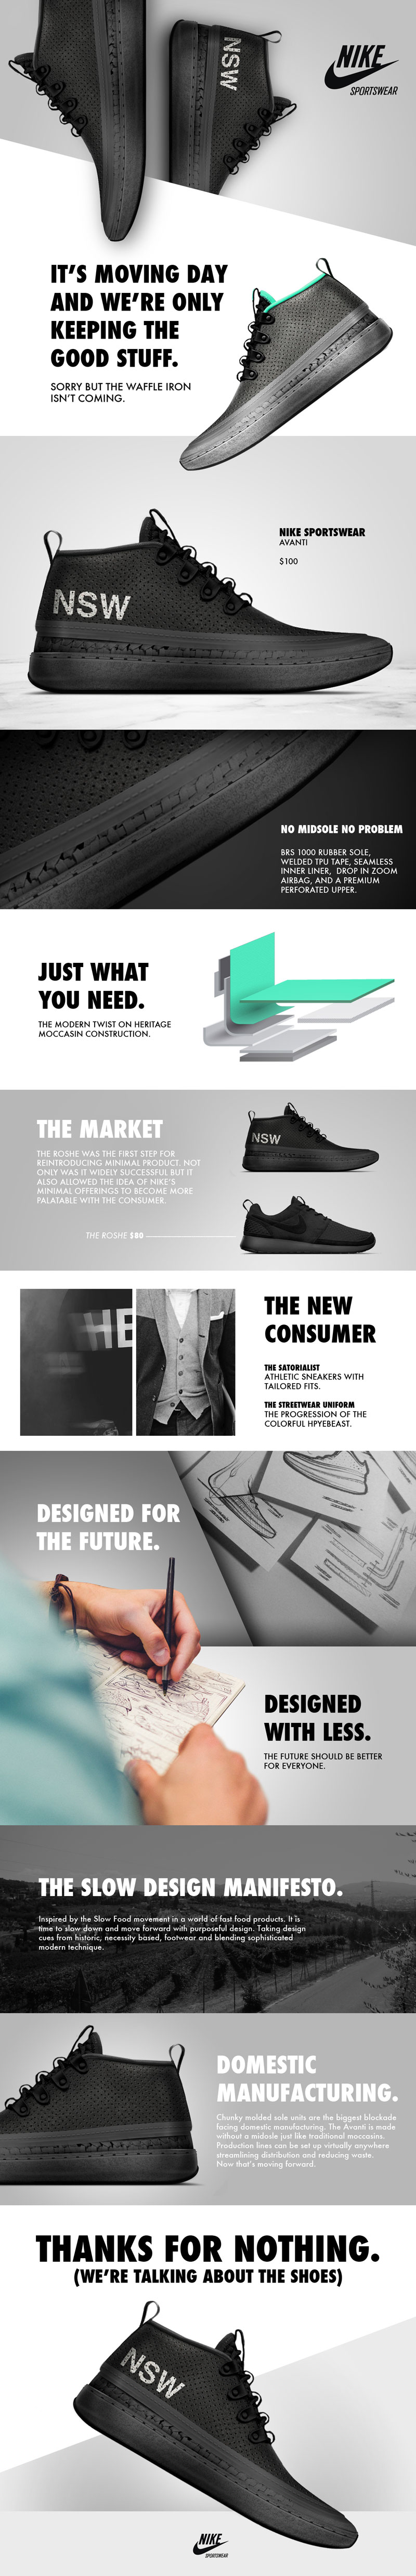 Nike AVANTI Product Web Design for Inspiration